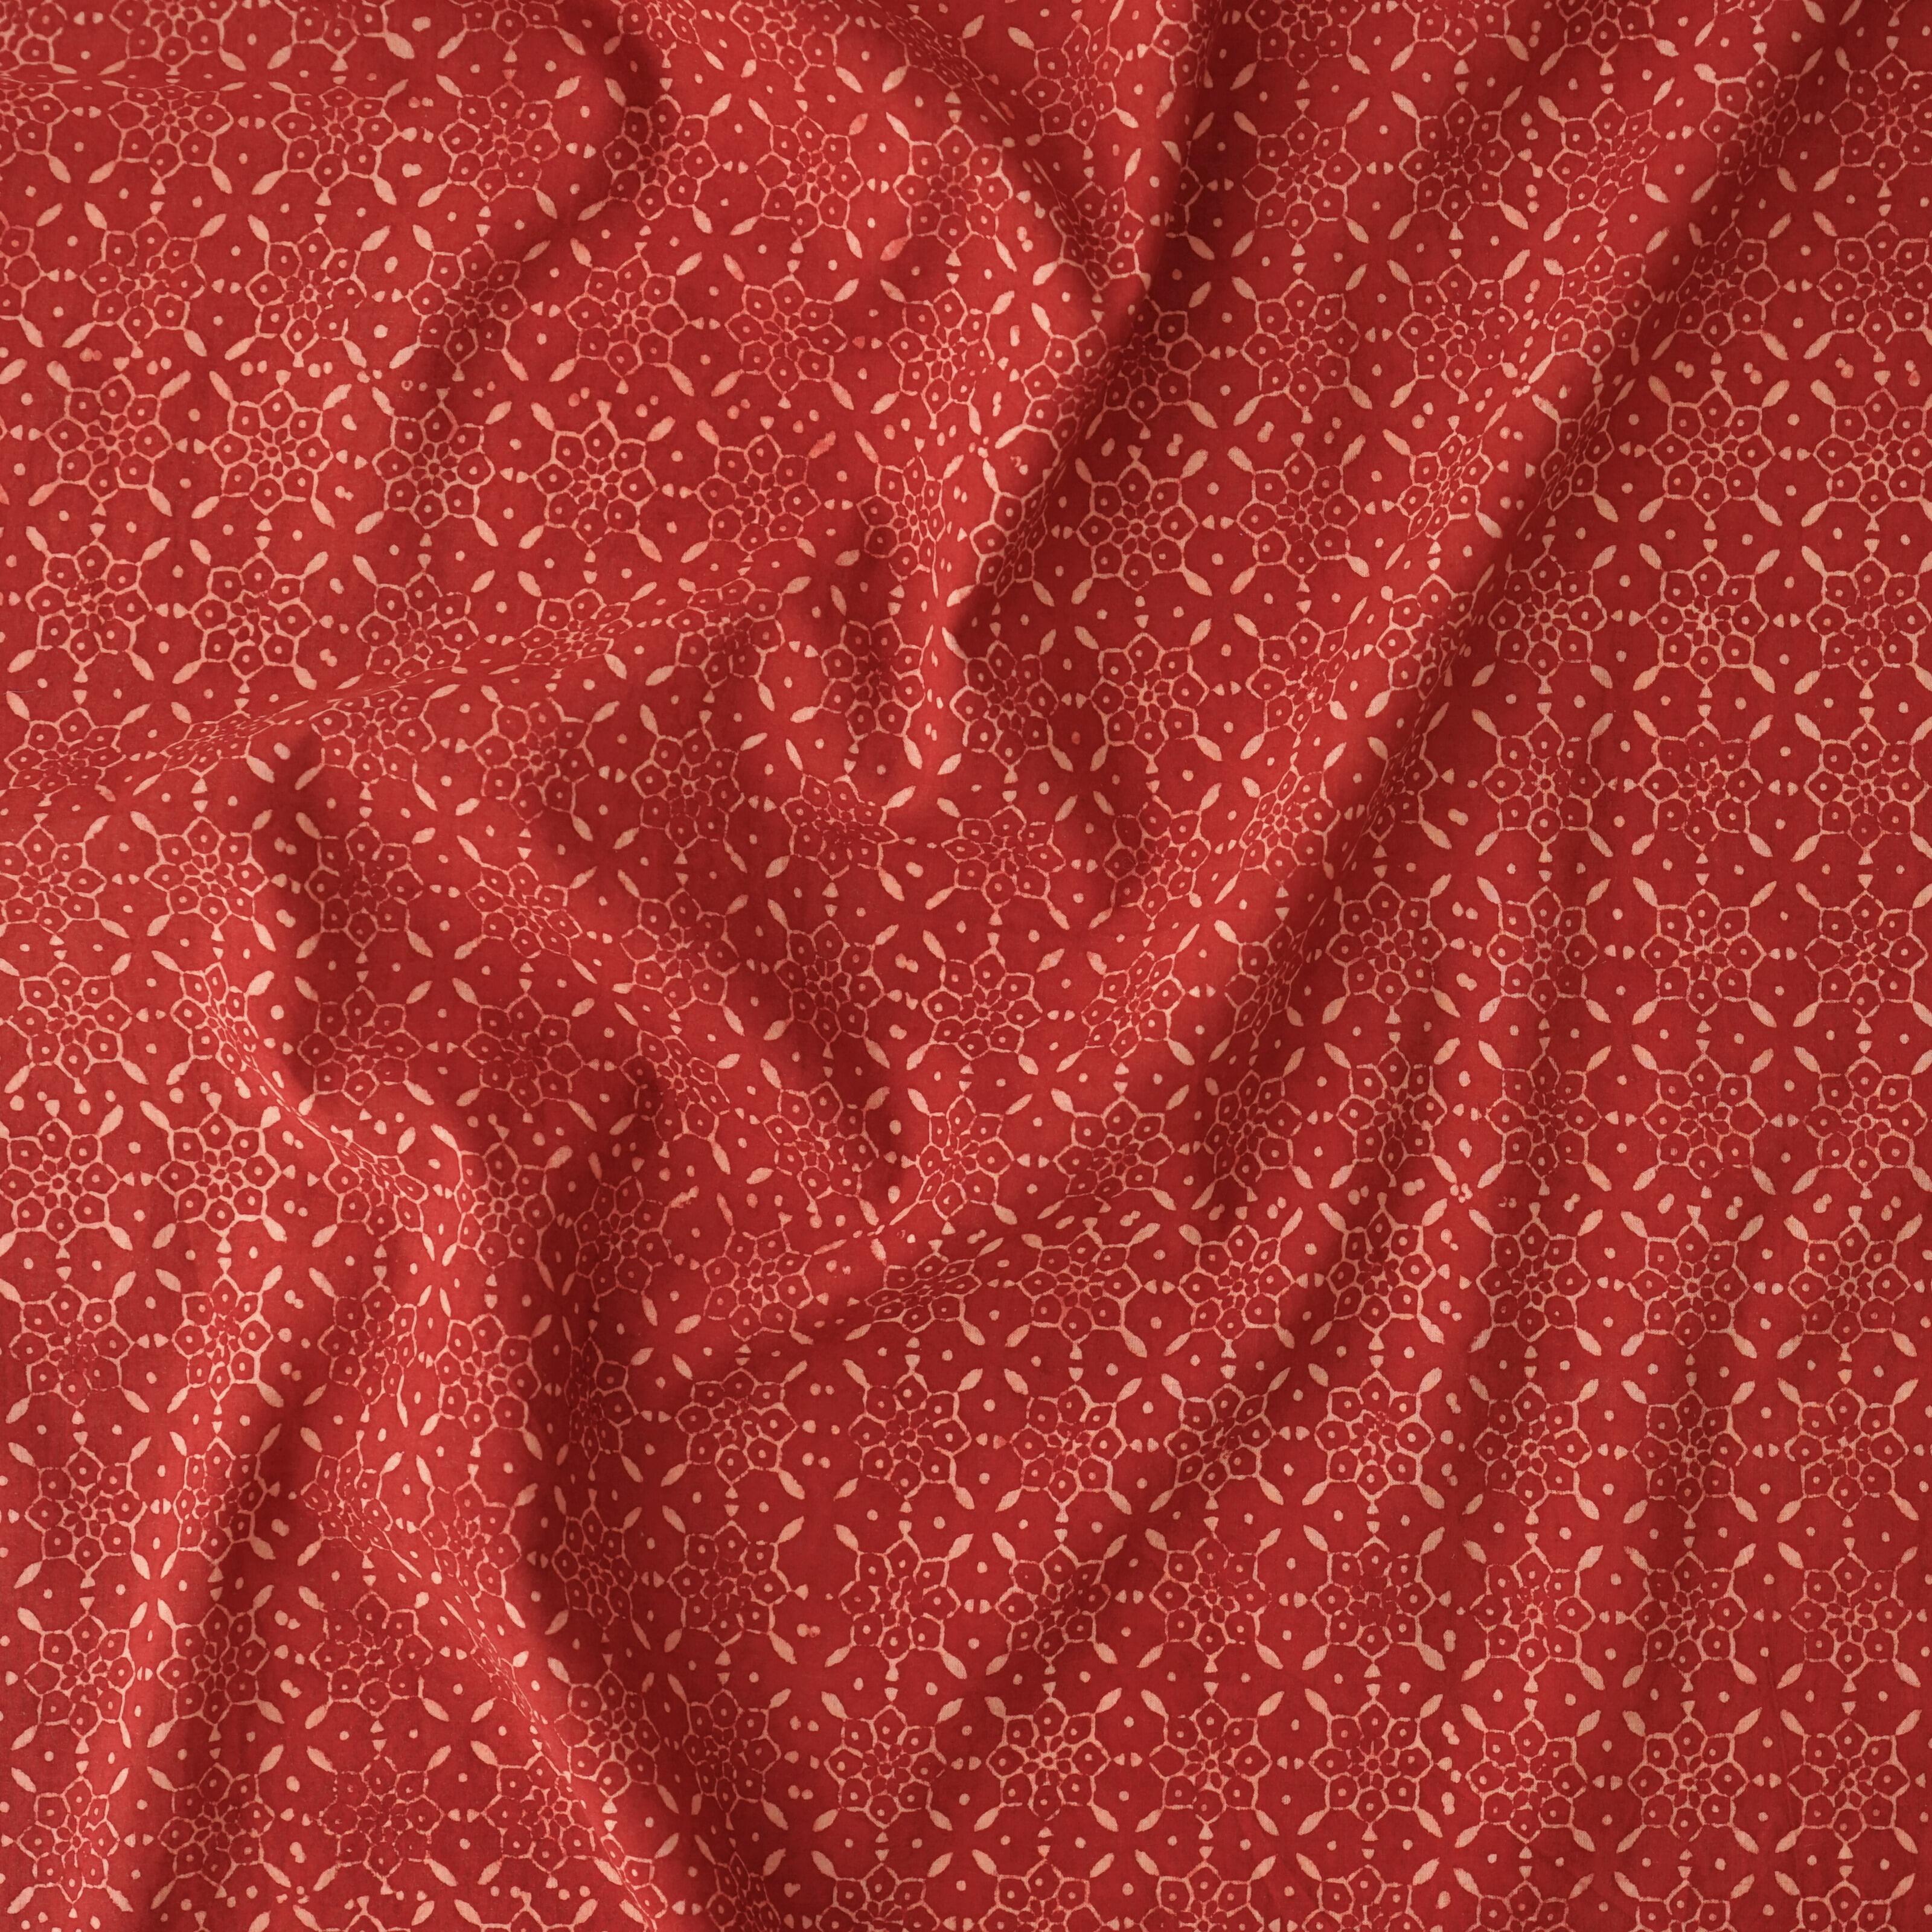 1 - AHM53 - Block-Printed Cotton Fabric - Alizarin Dye - Red - Pangs Motif - Contrast